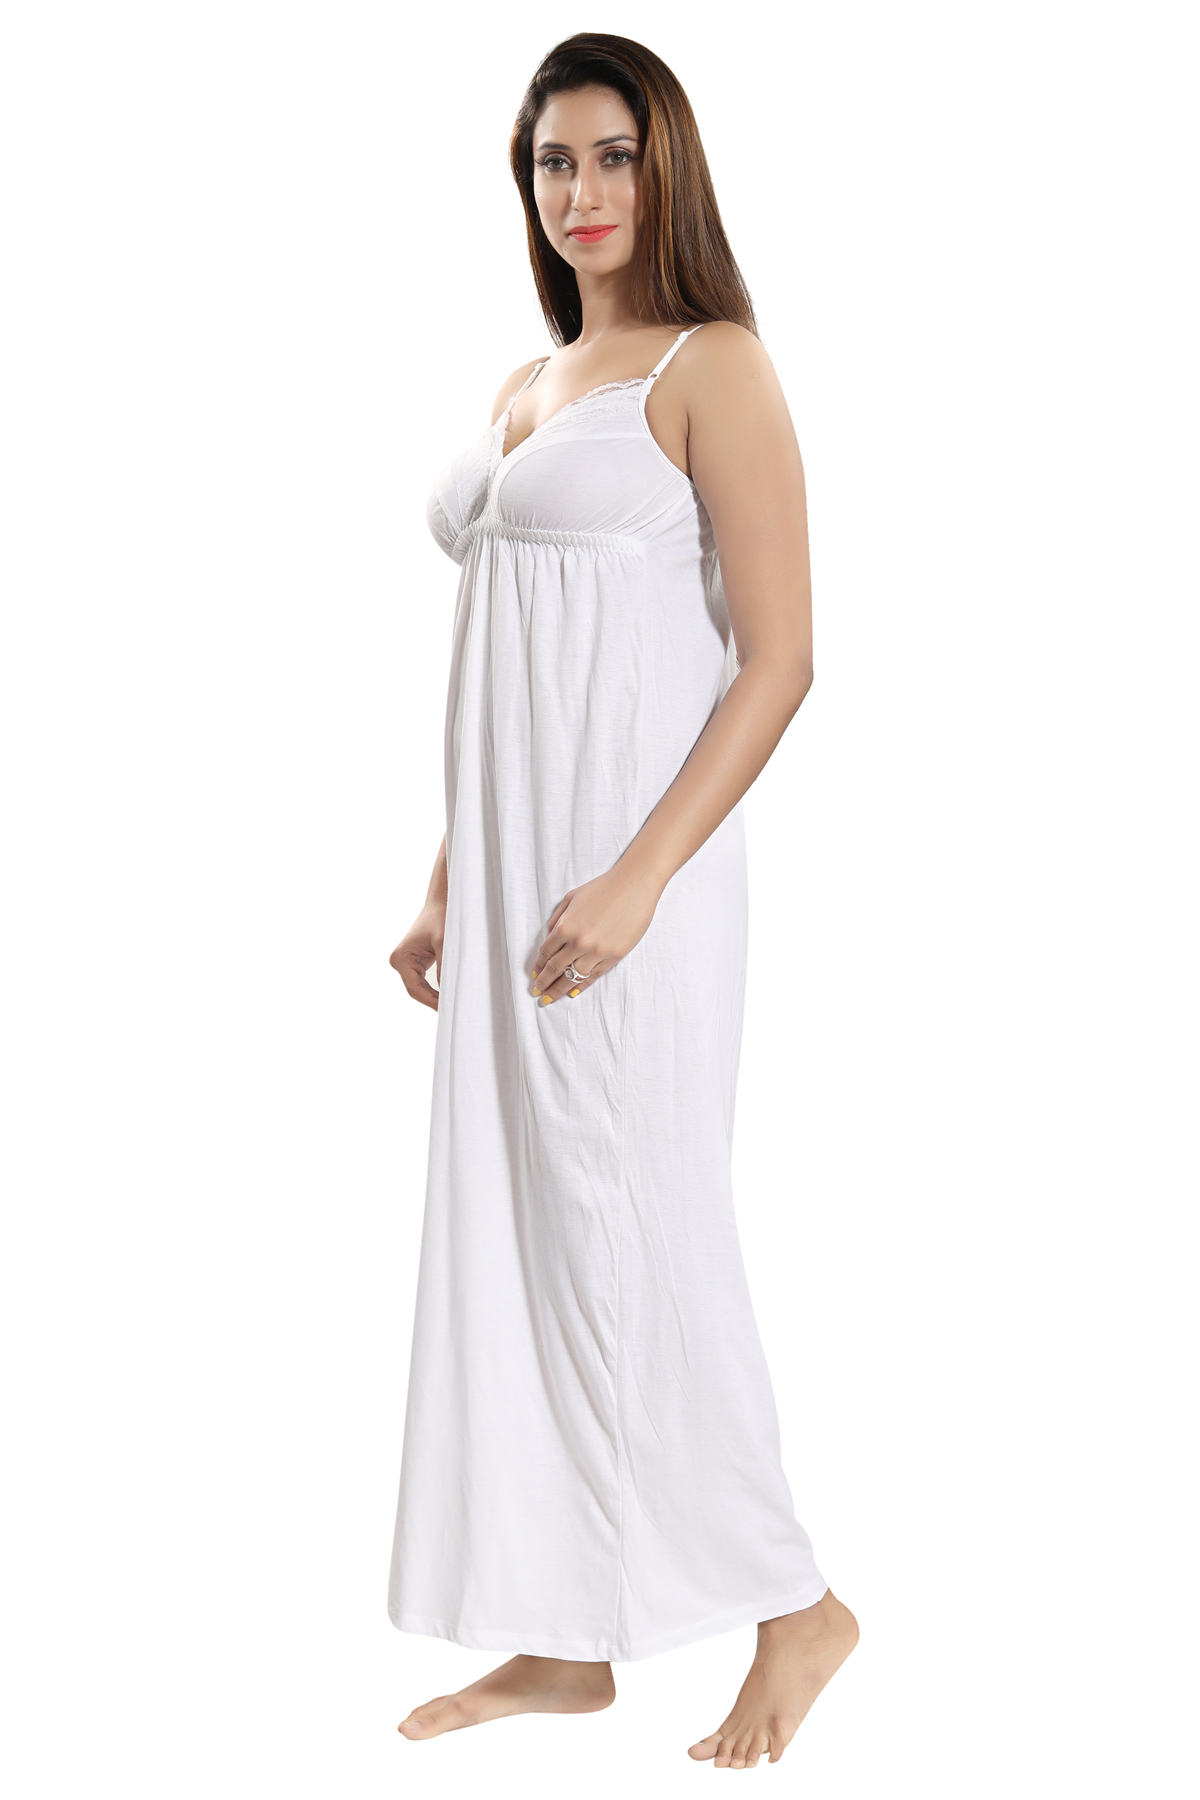 Buy Be You White Cotton Women Slip Nighty Night Dress Online ₹539 From Shopclues 